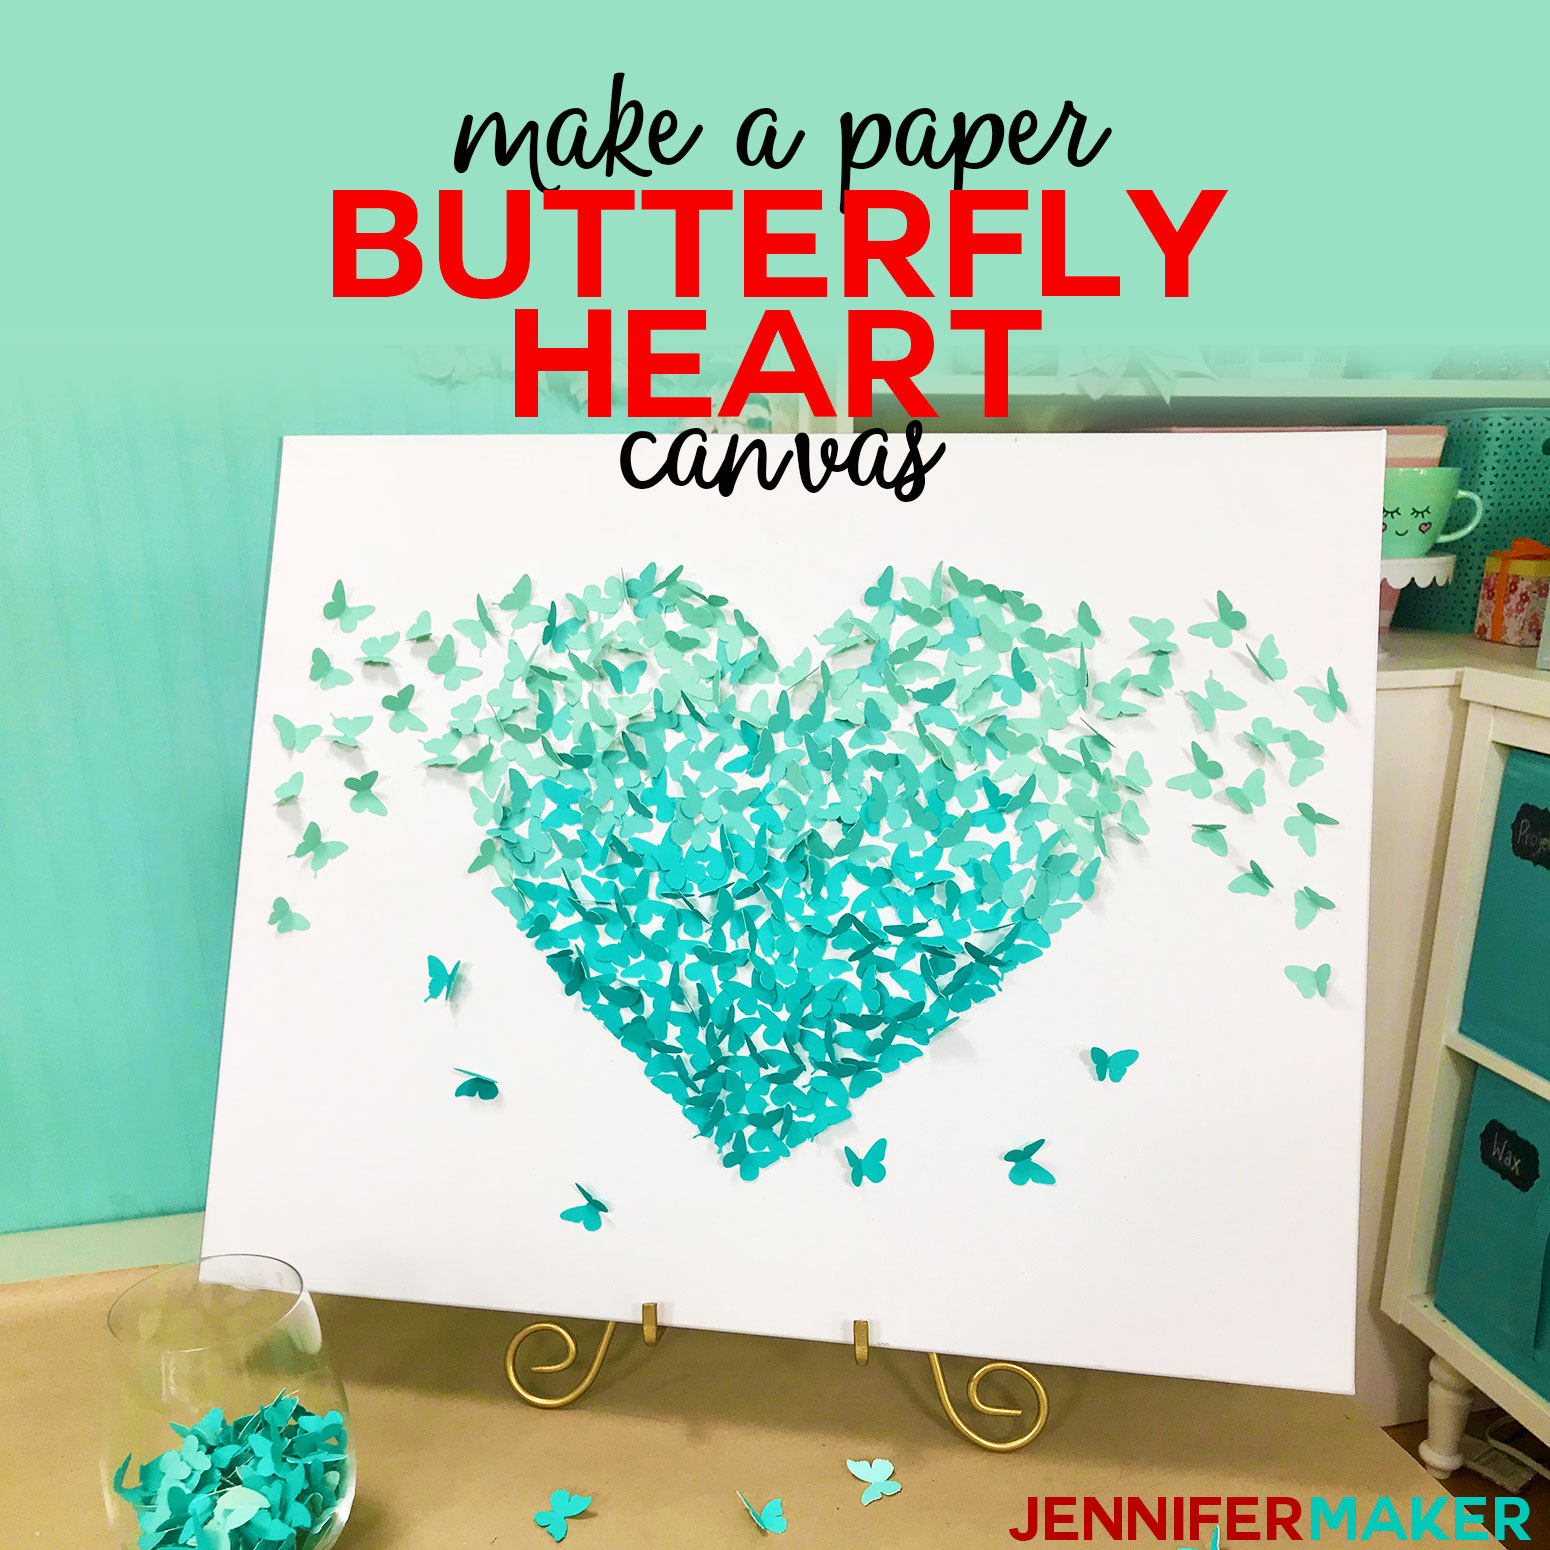 Paper Butterfly Canvas Wall Art Heart